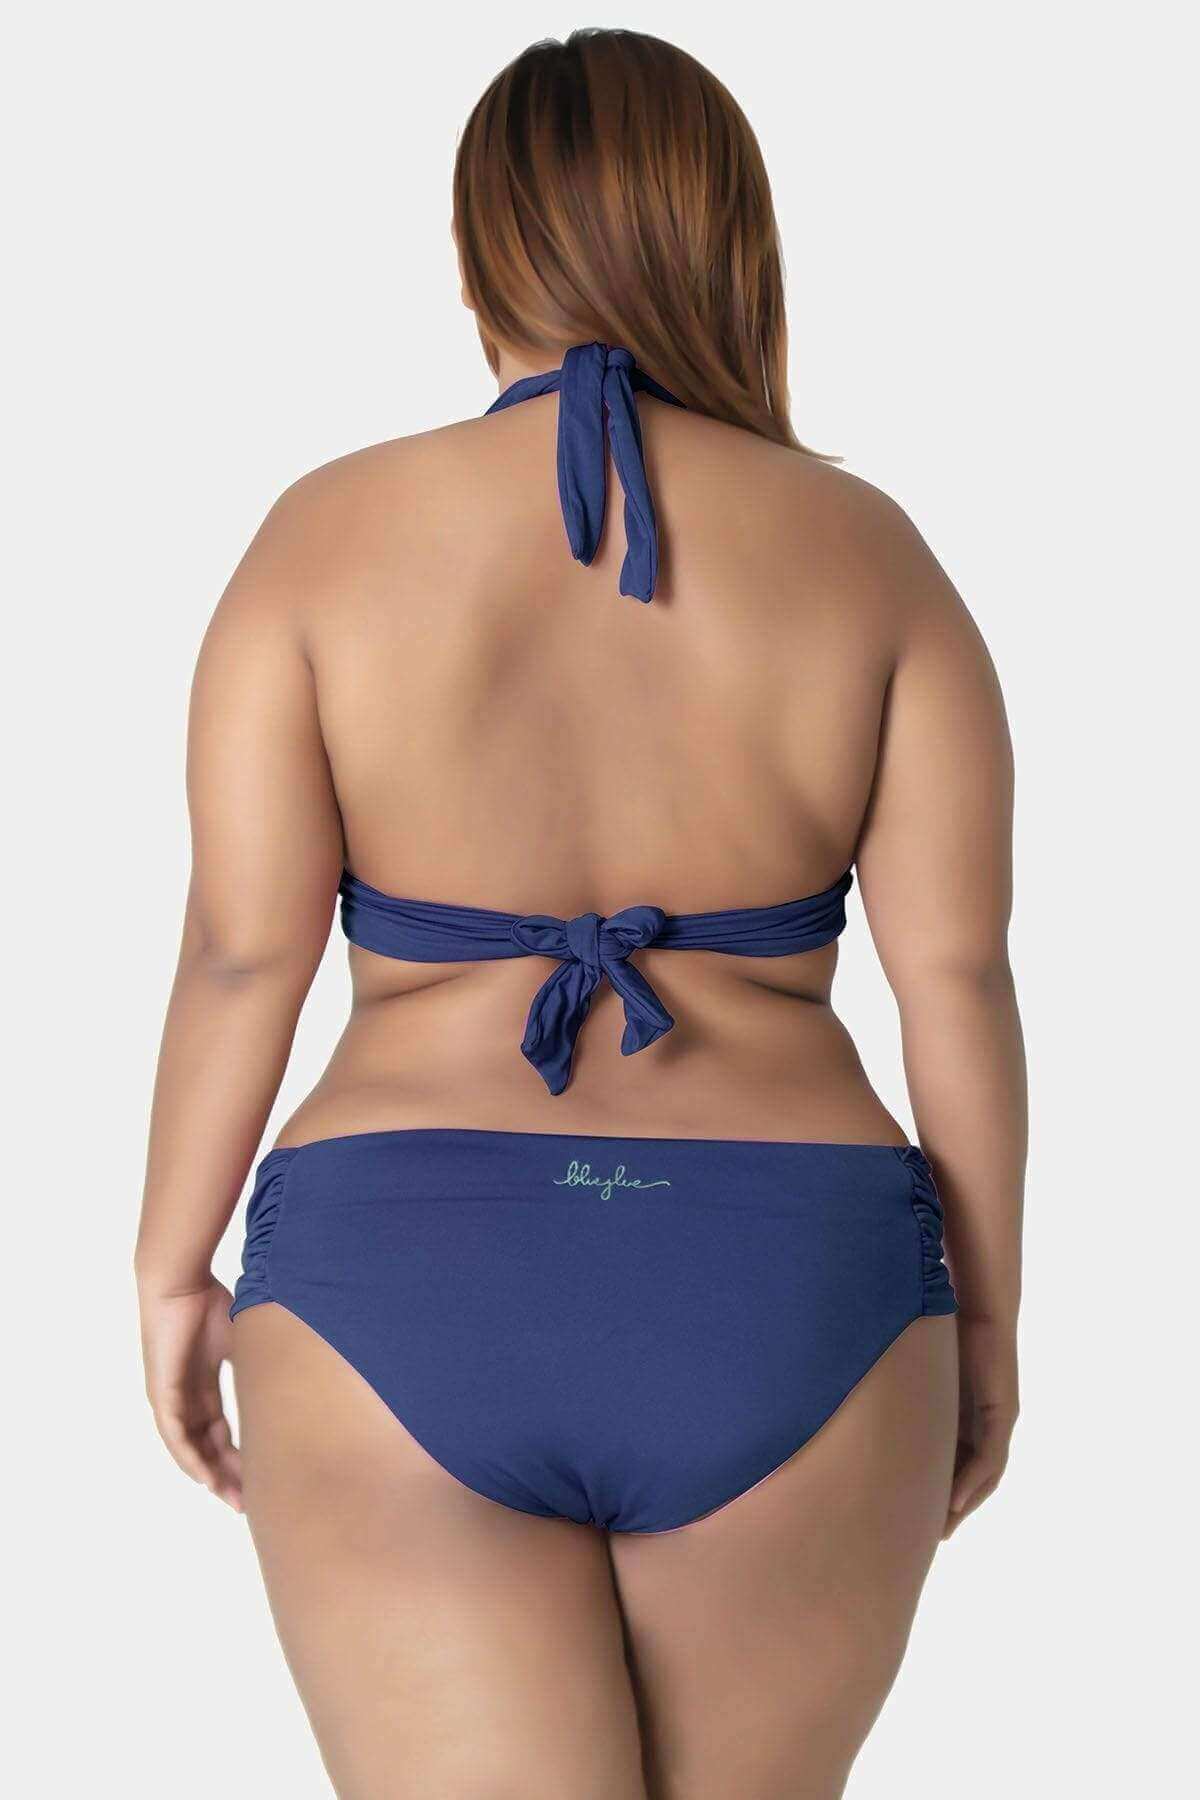 Thaikila Apparel & Accessories > Clothing > Swimwear Blue / Extra Large Thaikila Kaleido Norma Blue Padded Triangle Top & Reversible Blue Burgundy Bottom Bikini Swimwear Swimsuit Set